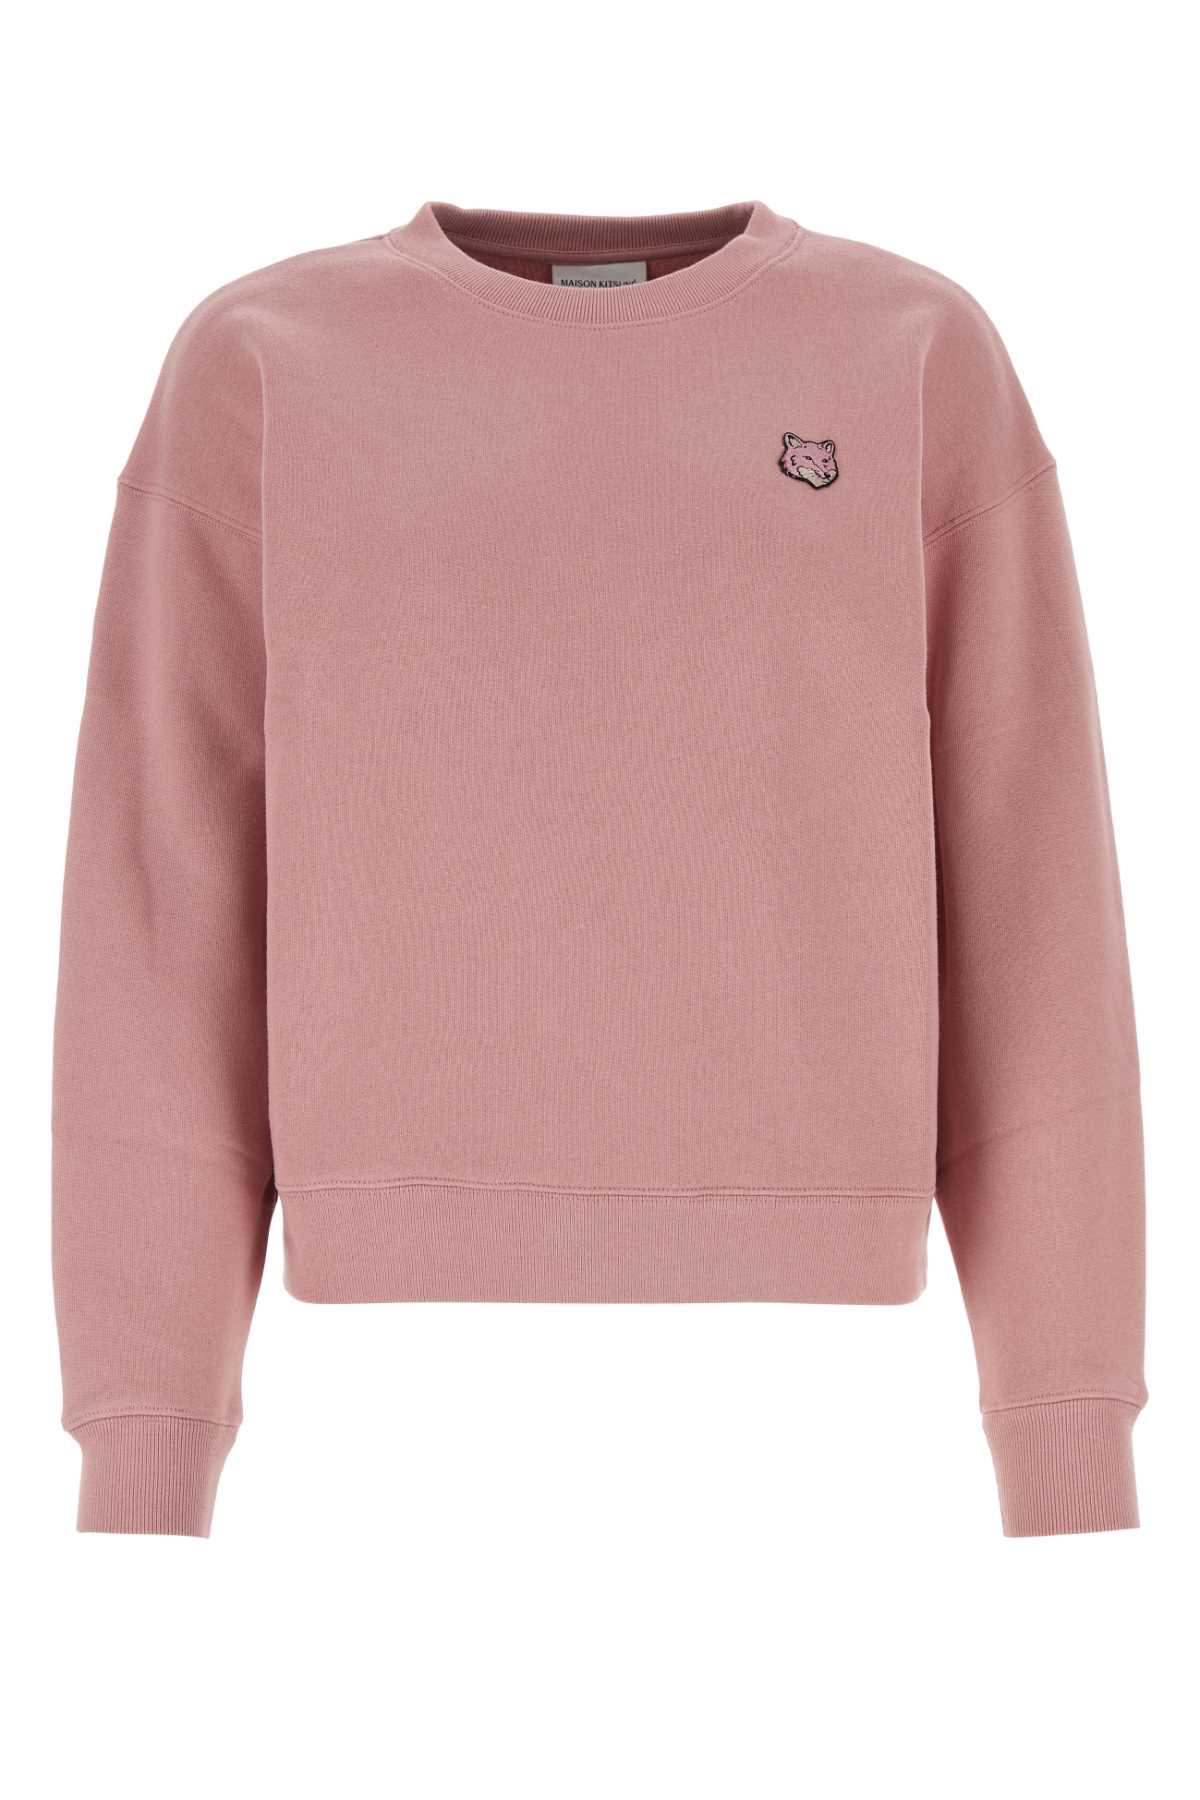 Maison Kitsuné Dark Pink Cotton Sweatshirt